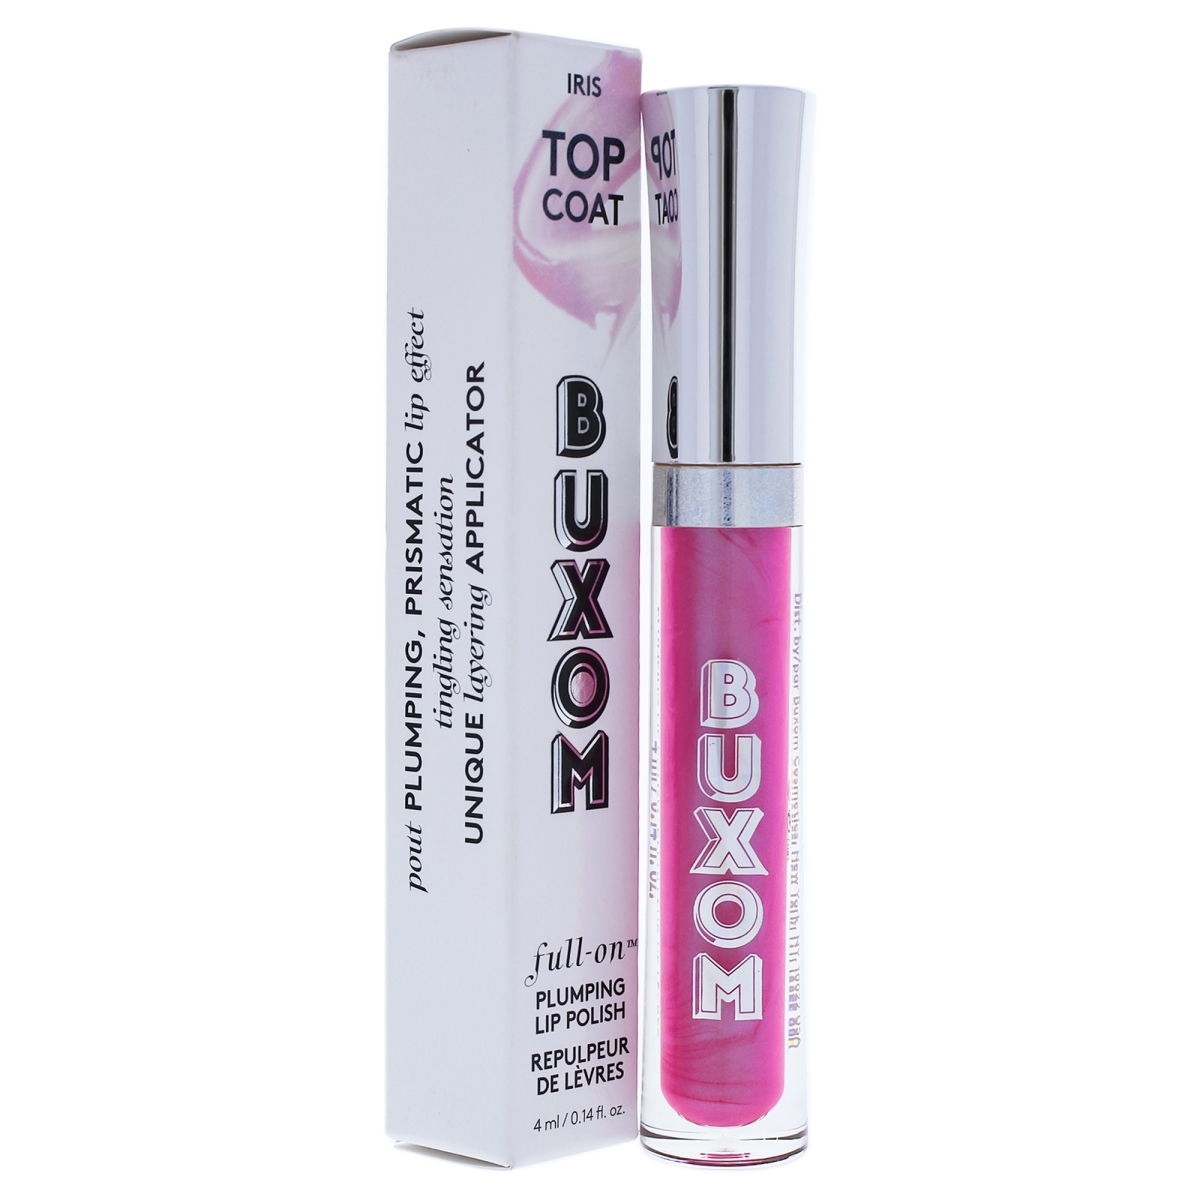 I0086638 0.15 Oz Full-on Plumping Lip Polish Lip Gloss For Womens - Iris